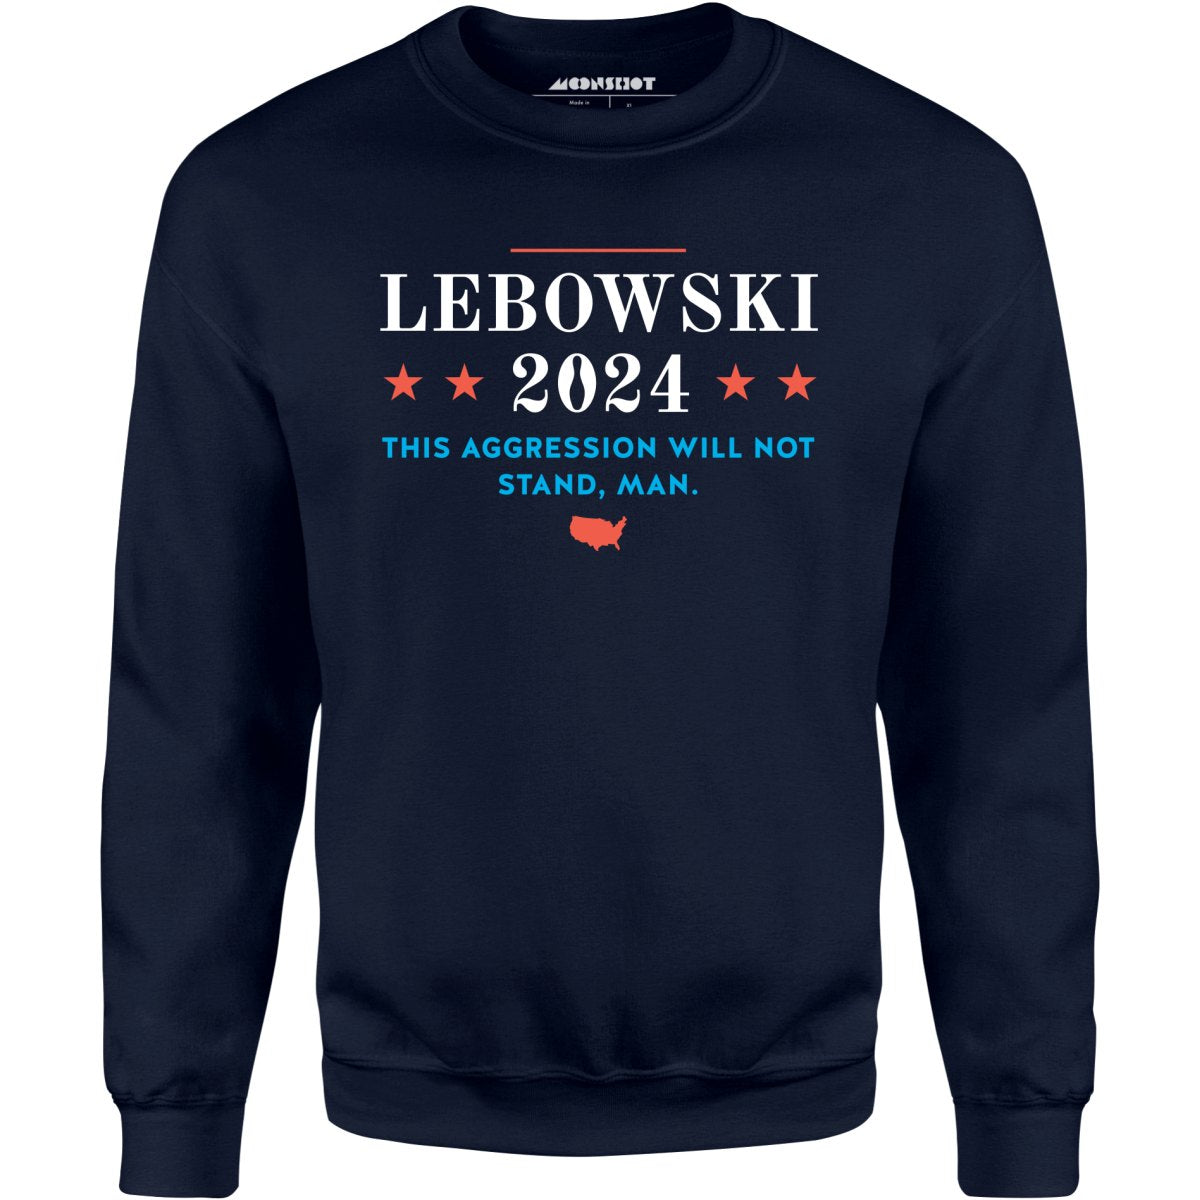 Lebowski 2024 - Unisex Sweatshirt